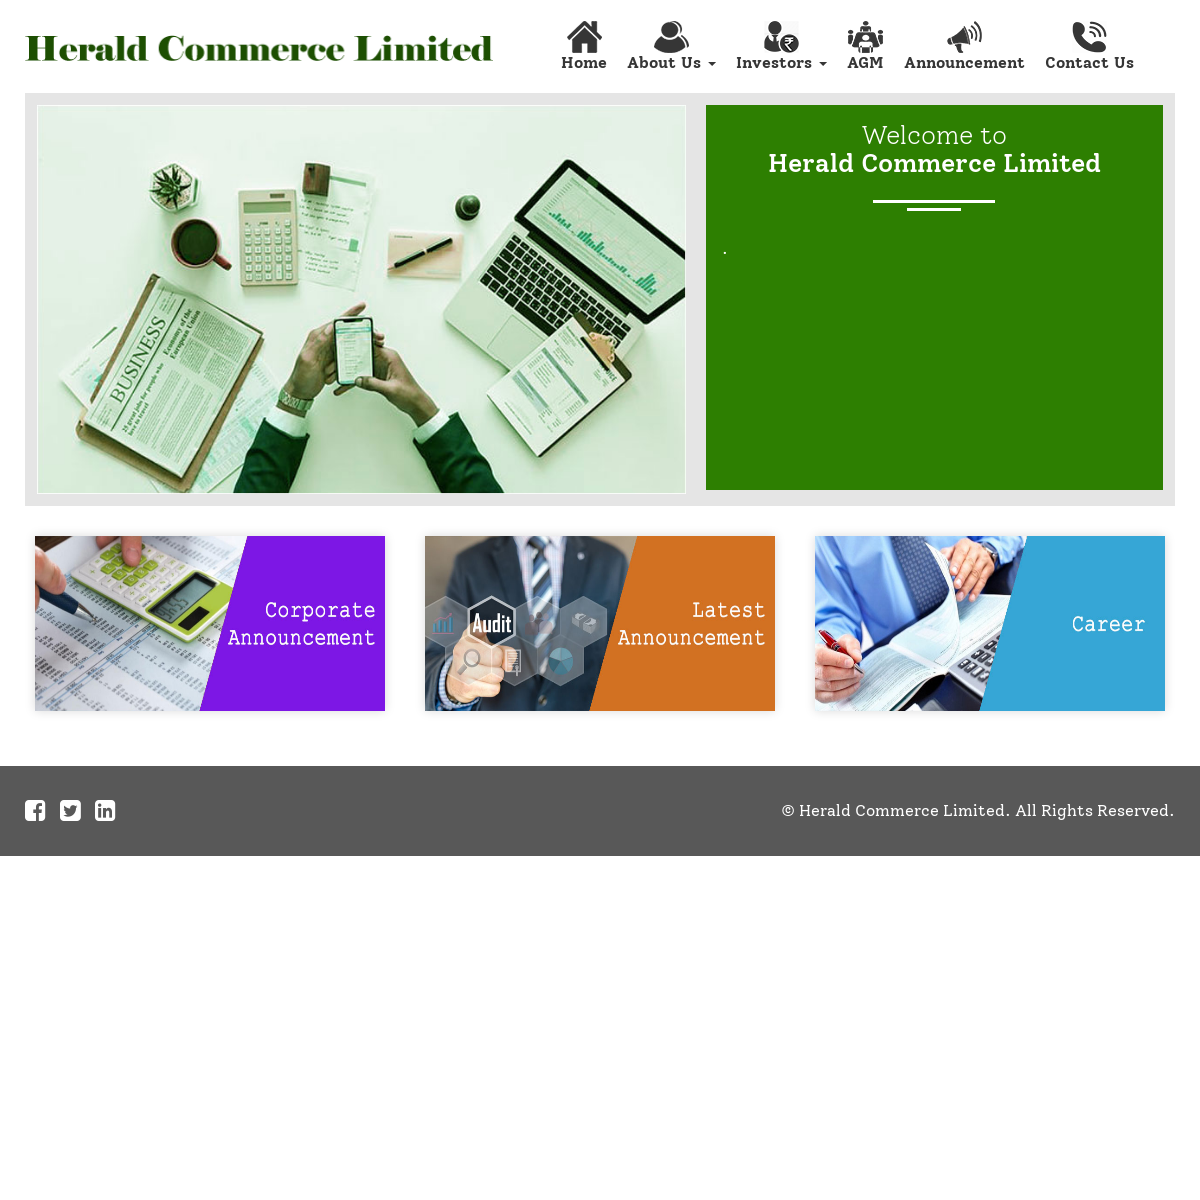 A complete backup of heraldcommerce.com